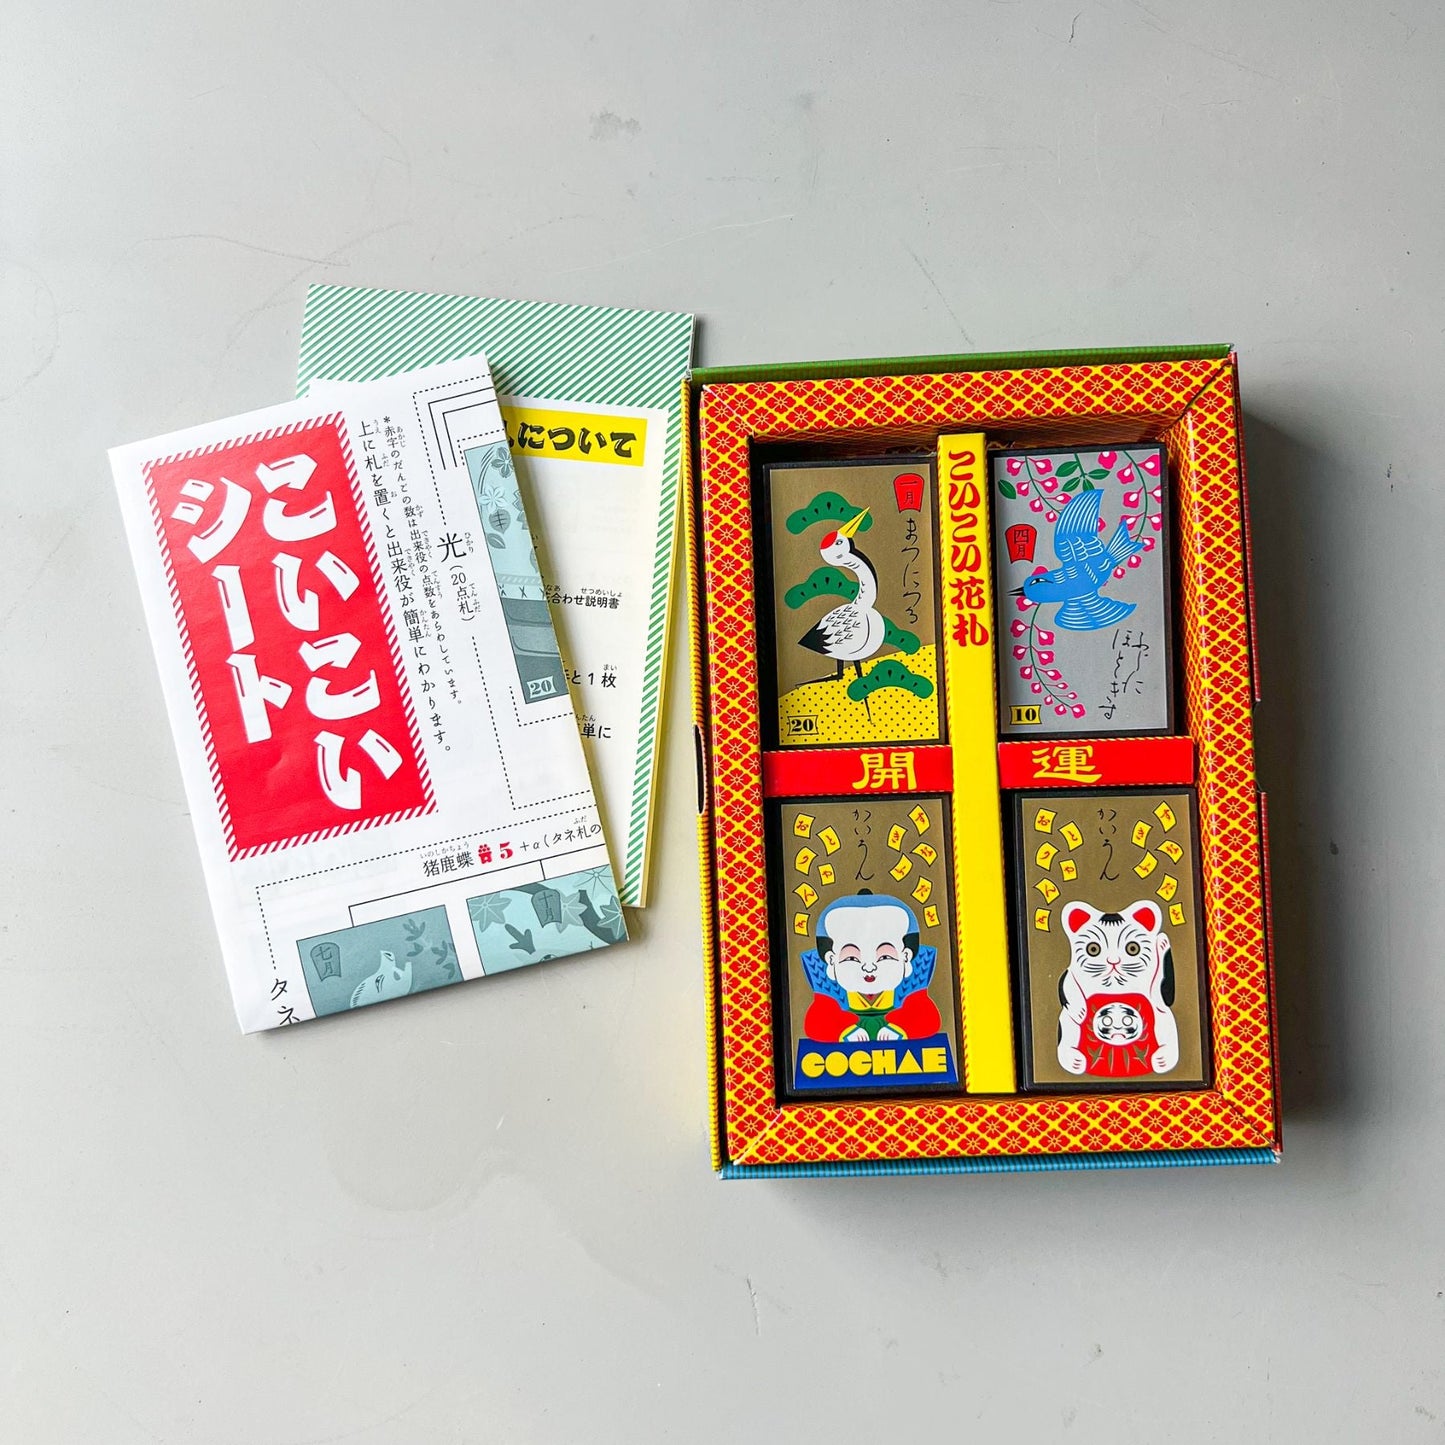 Modern Designed Hanafuda "Japanese Flower Card Game" by COCHAE